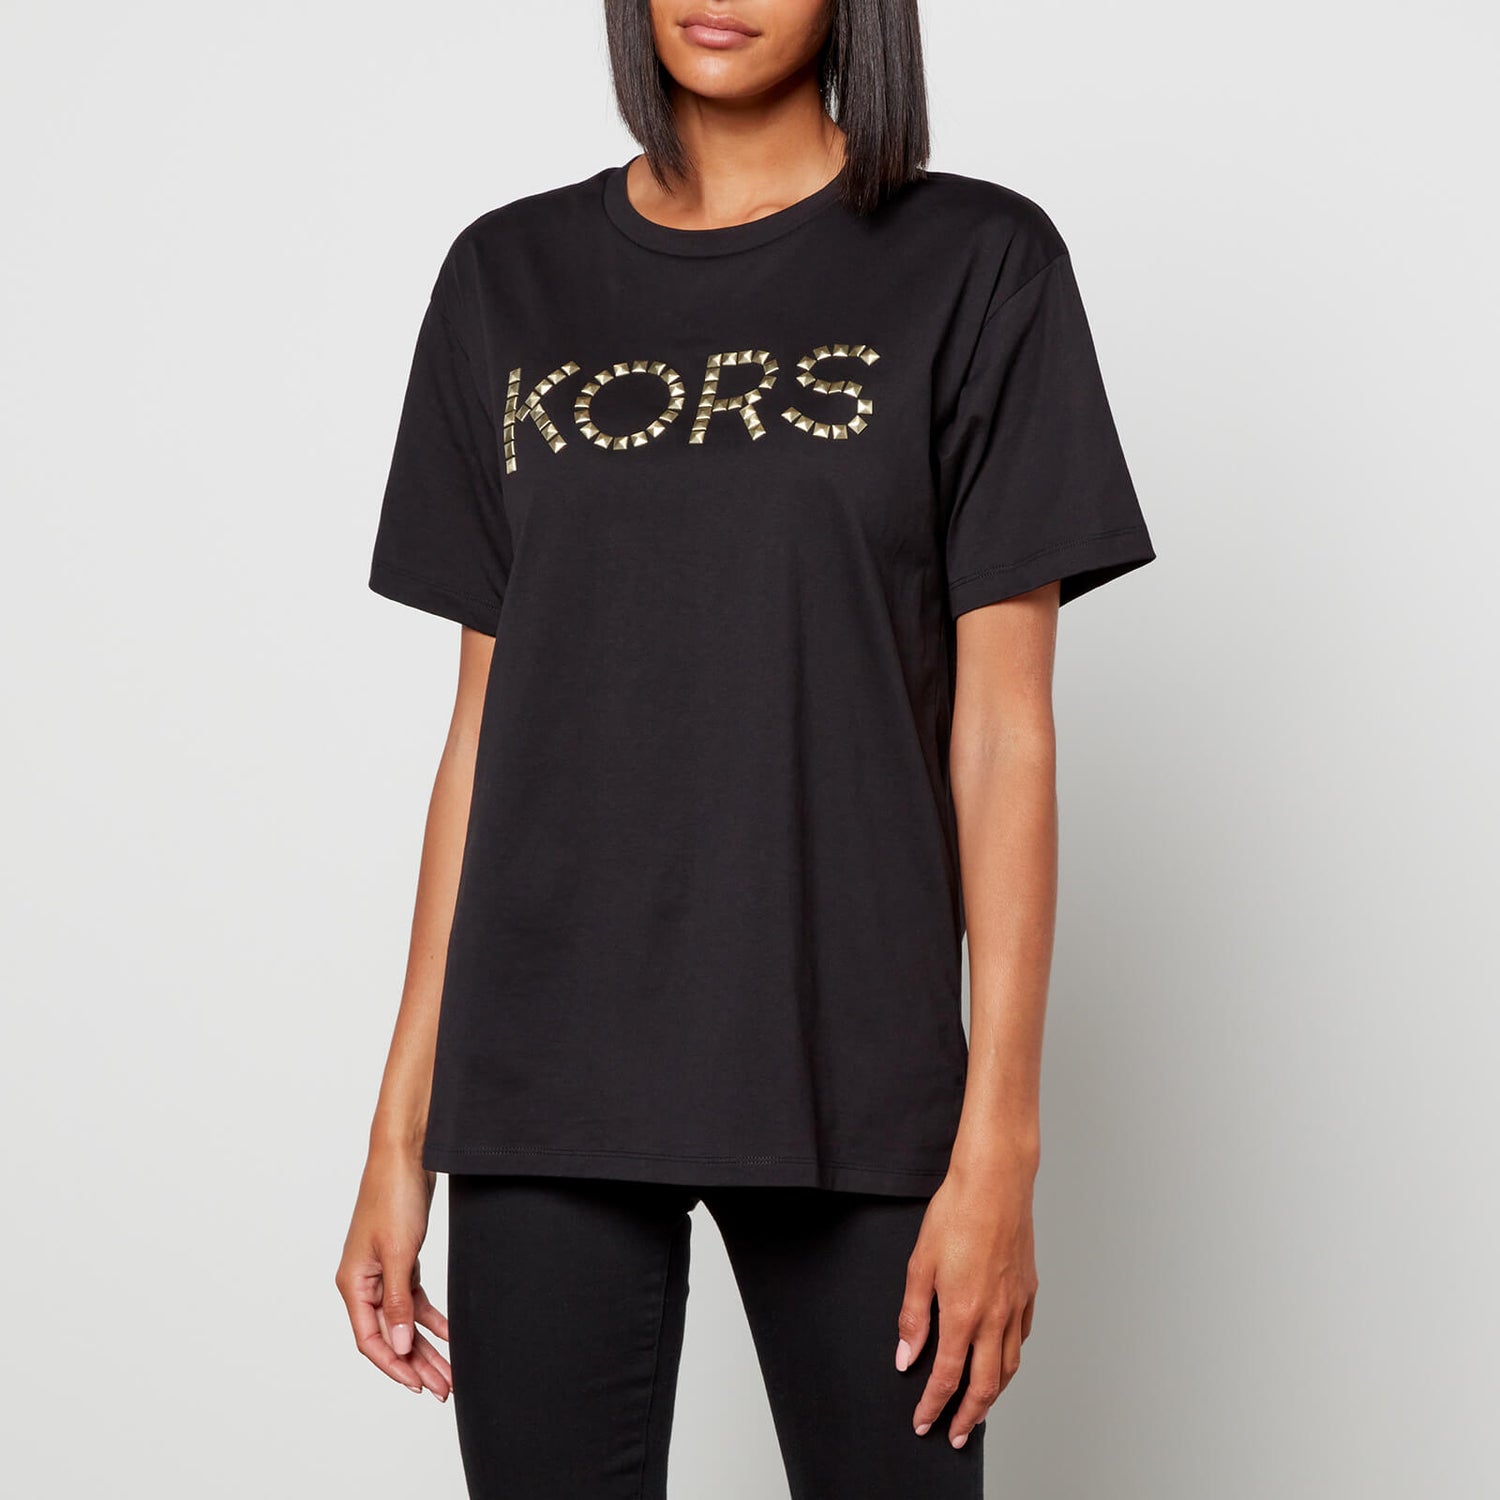 MICHAEL Michael Kors Women's Studded Kors Bf T-Shirt - Black